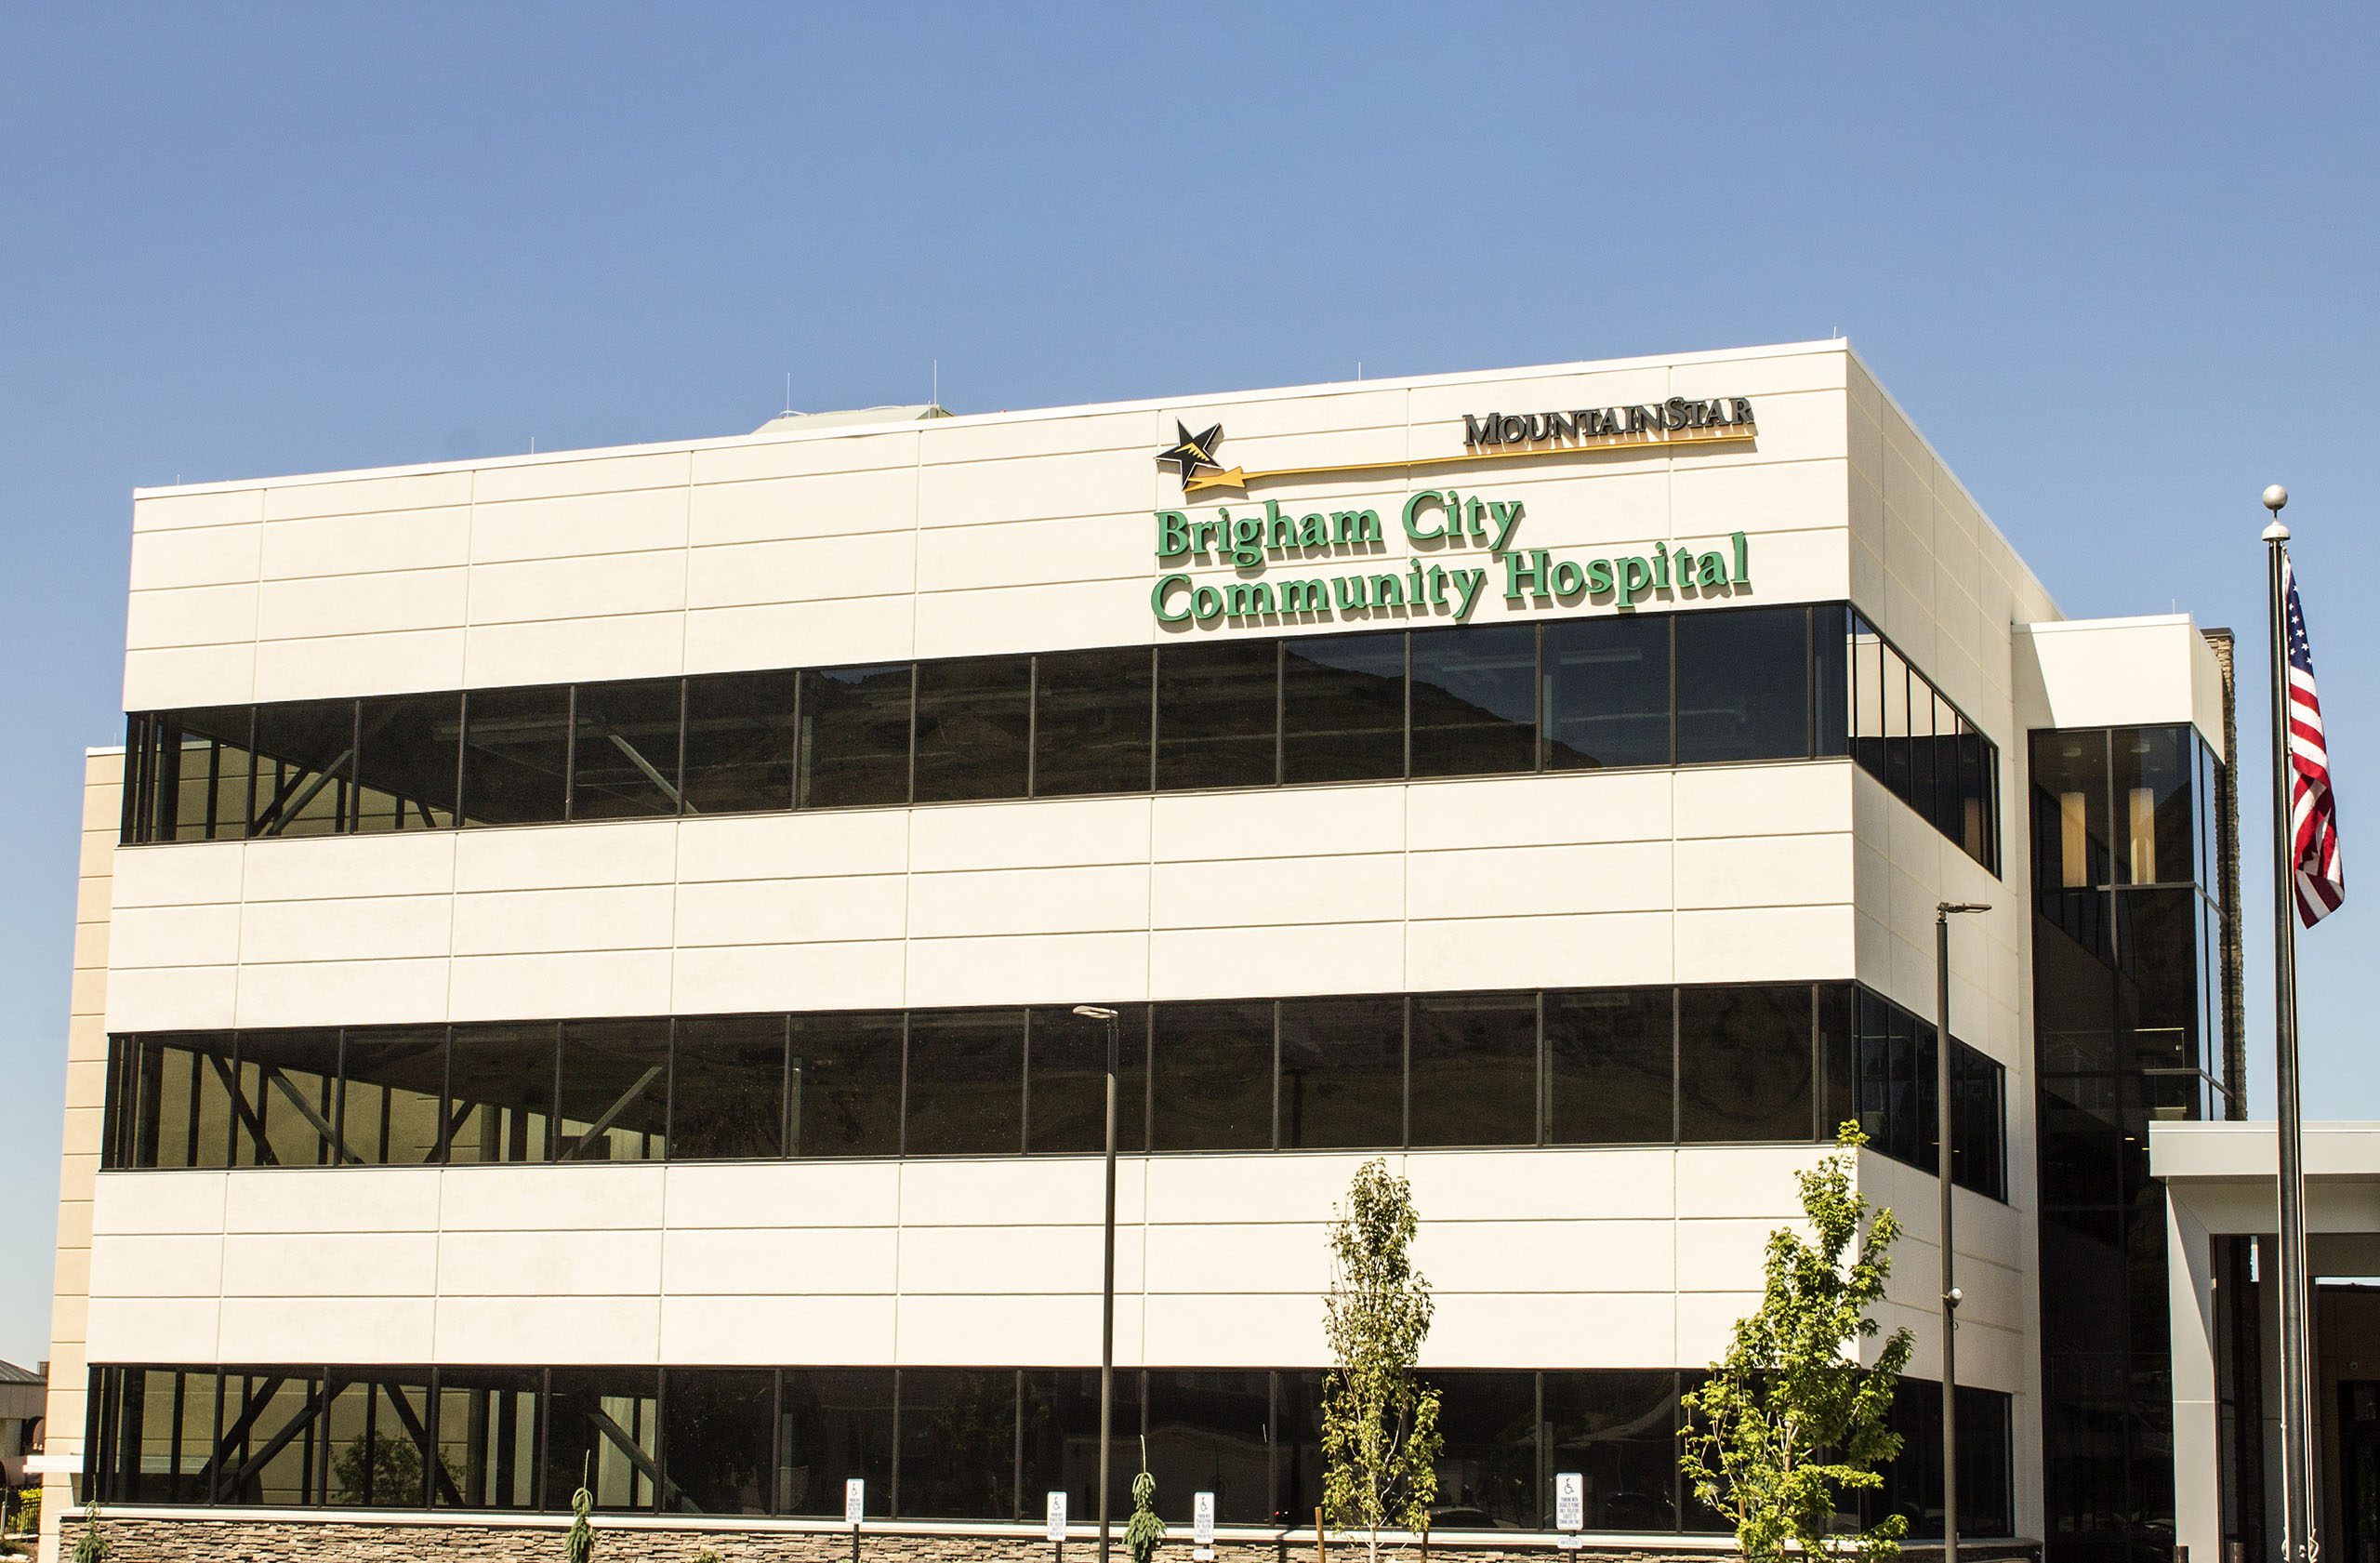 Brigham City Community Hospital